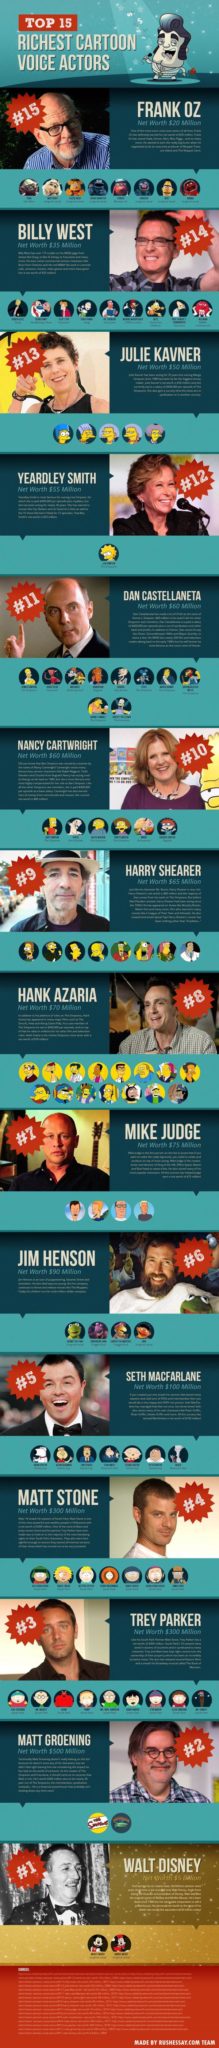 Infographic) The Top 15 Richest Cartoon Voice Actors - Addicted 2 Success